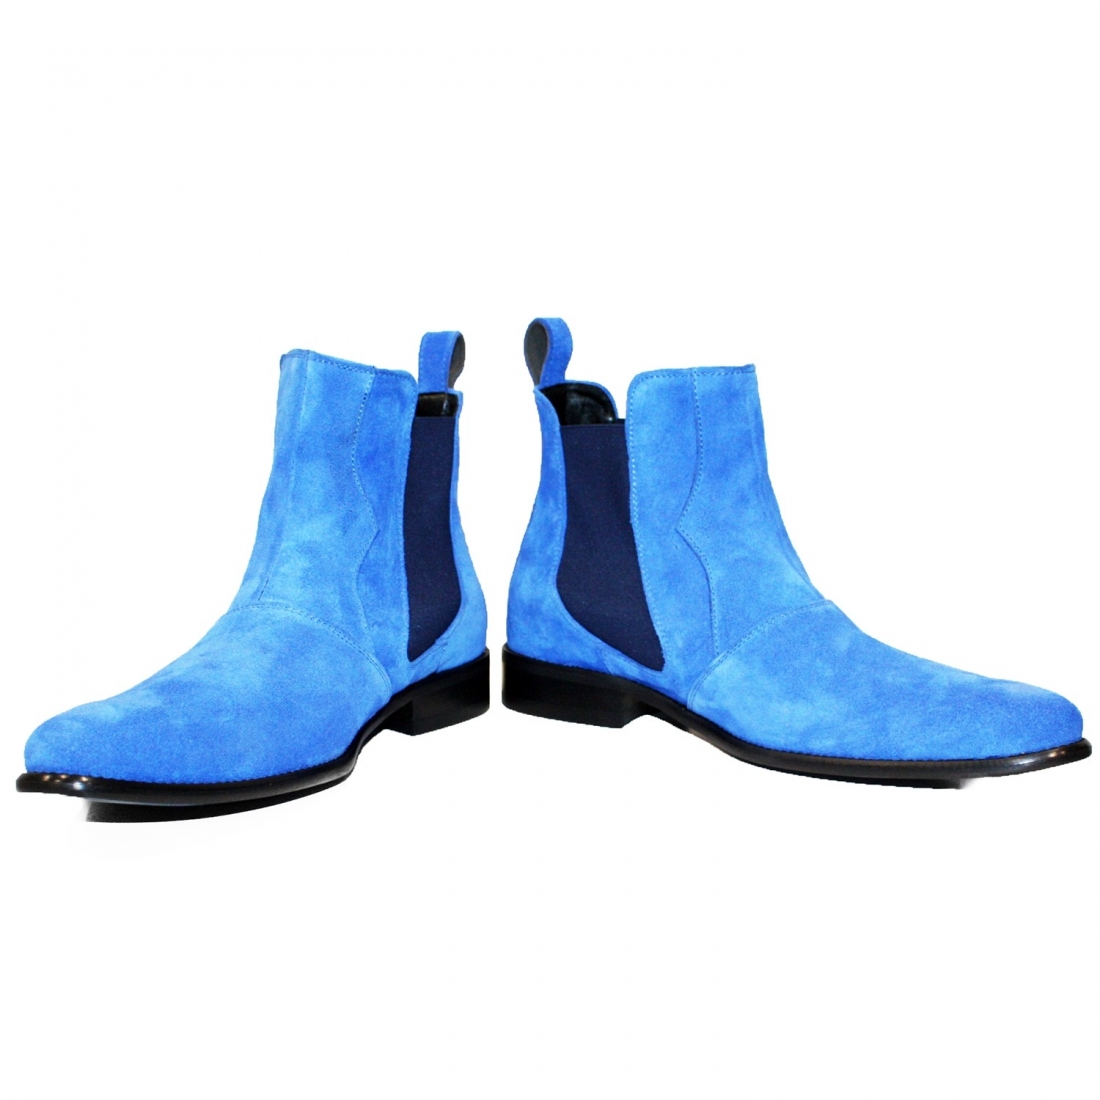 Modello Bluemoon - Chelsea Botas - Handmade Colorful Italian Leather Shoes